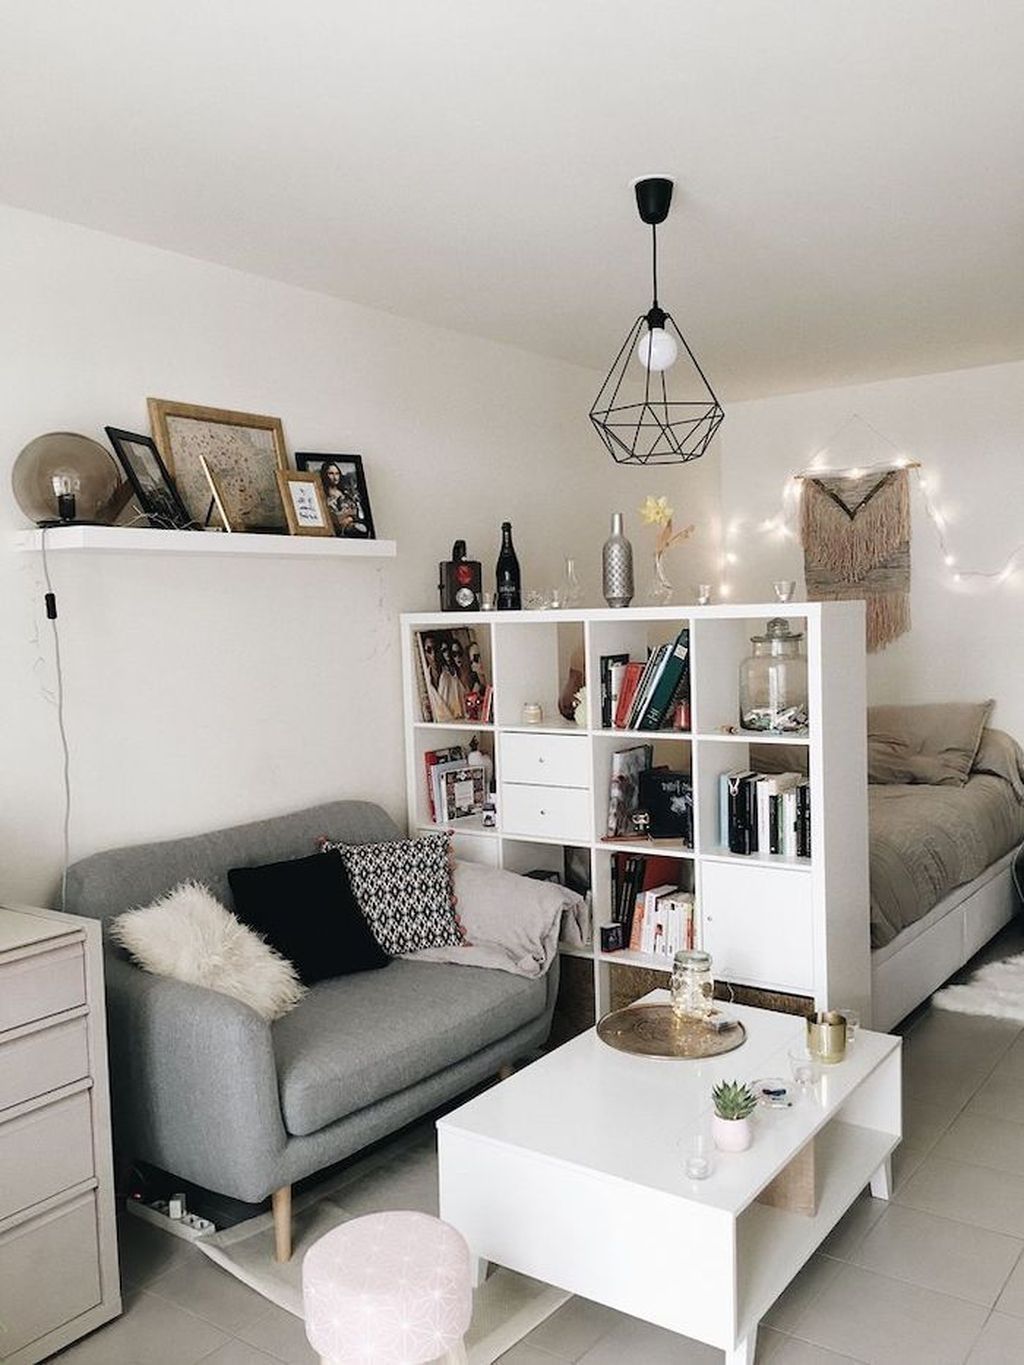 20+ Attractive Diy Home Decor Ideas On A Budget For Apartment -   19 room decor Living studio apartments ideas